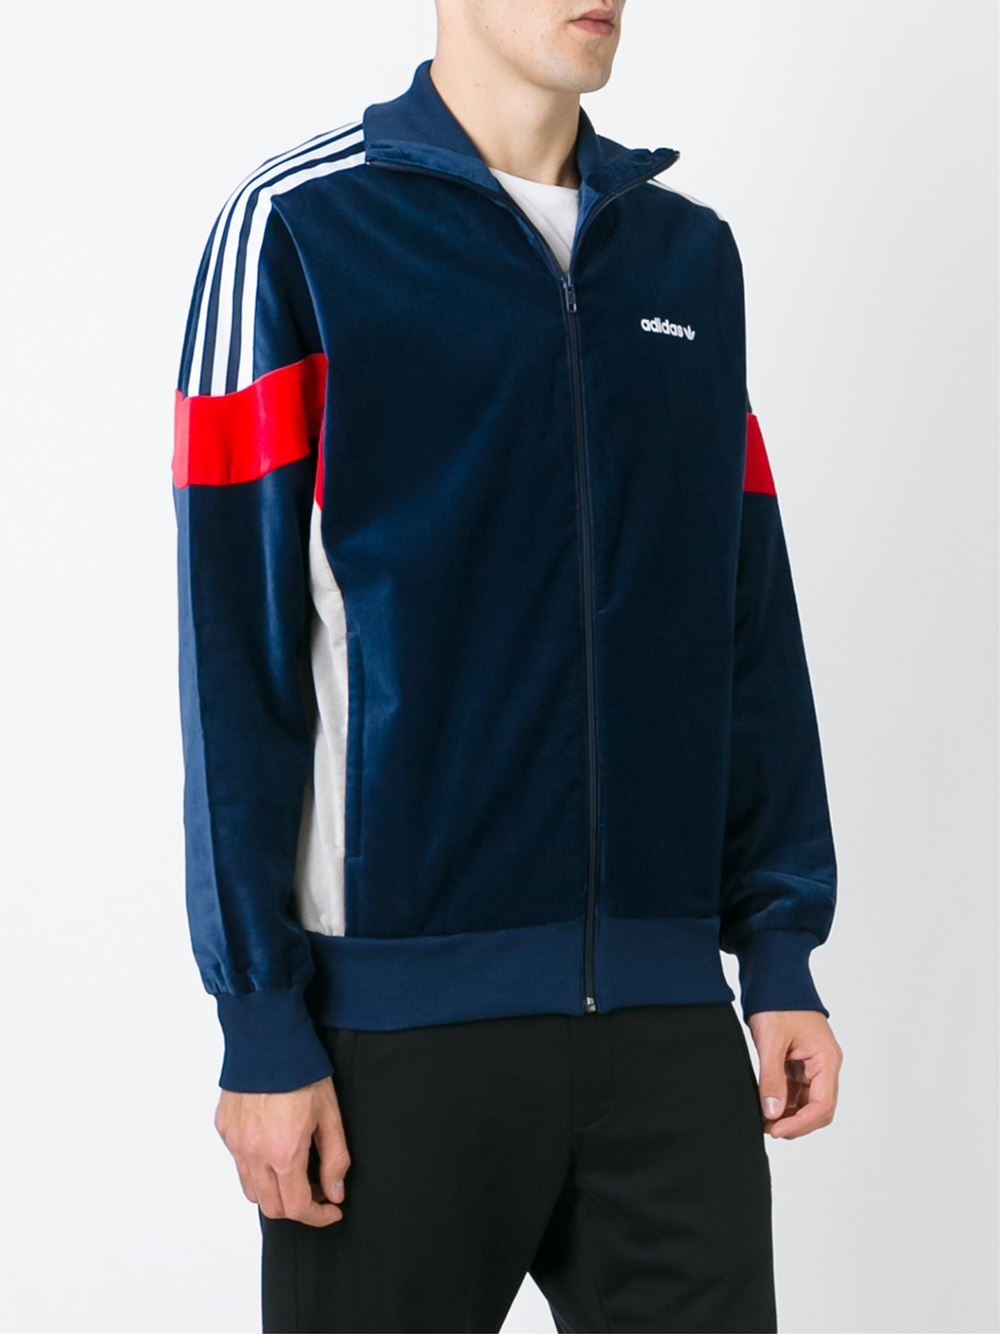 Lyst - Adidas Originals 'clr84' Sport Jacket in Blue for Men